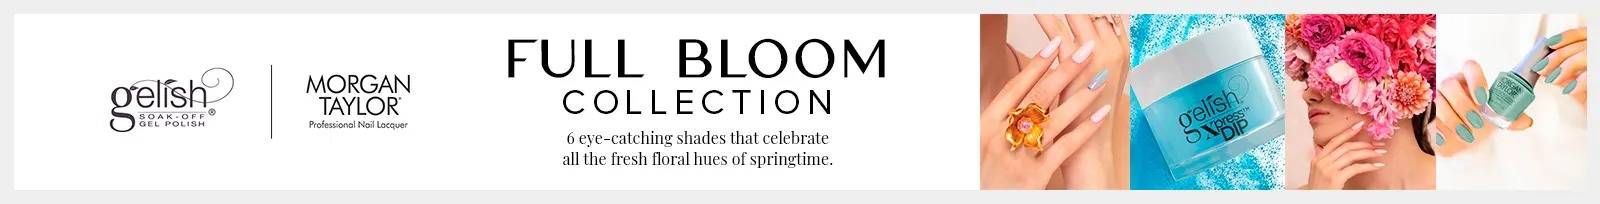 Gelish & Morgan Taylor Full Bloom Collection